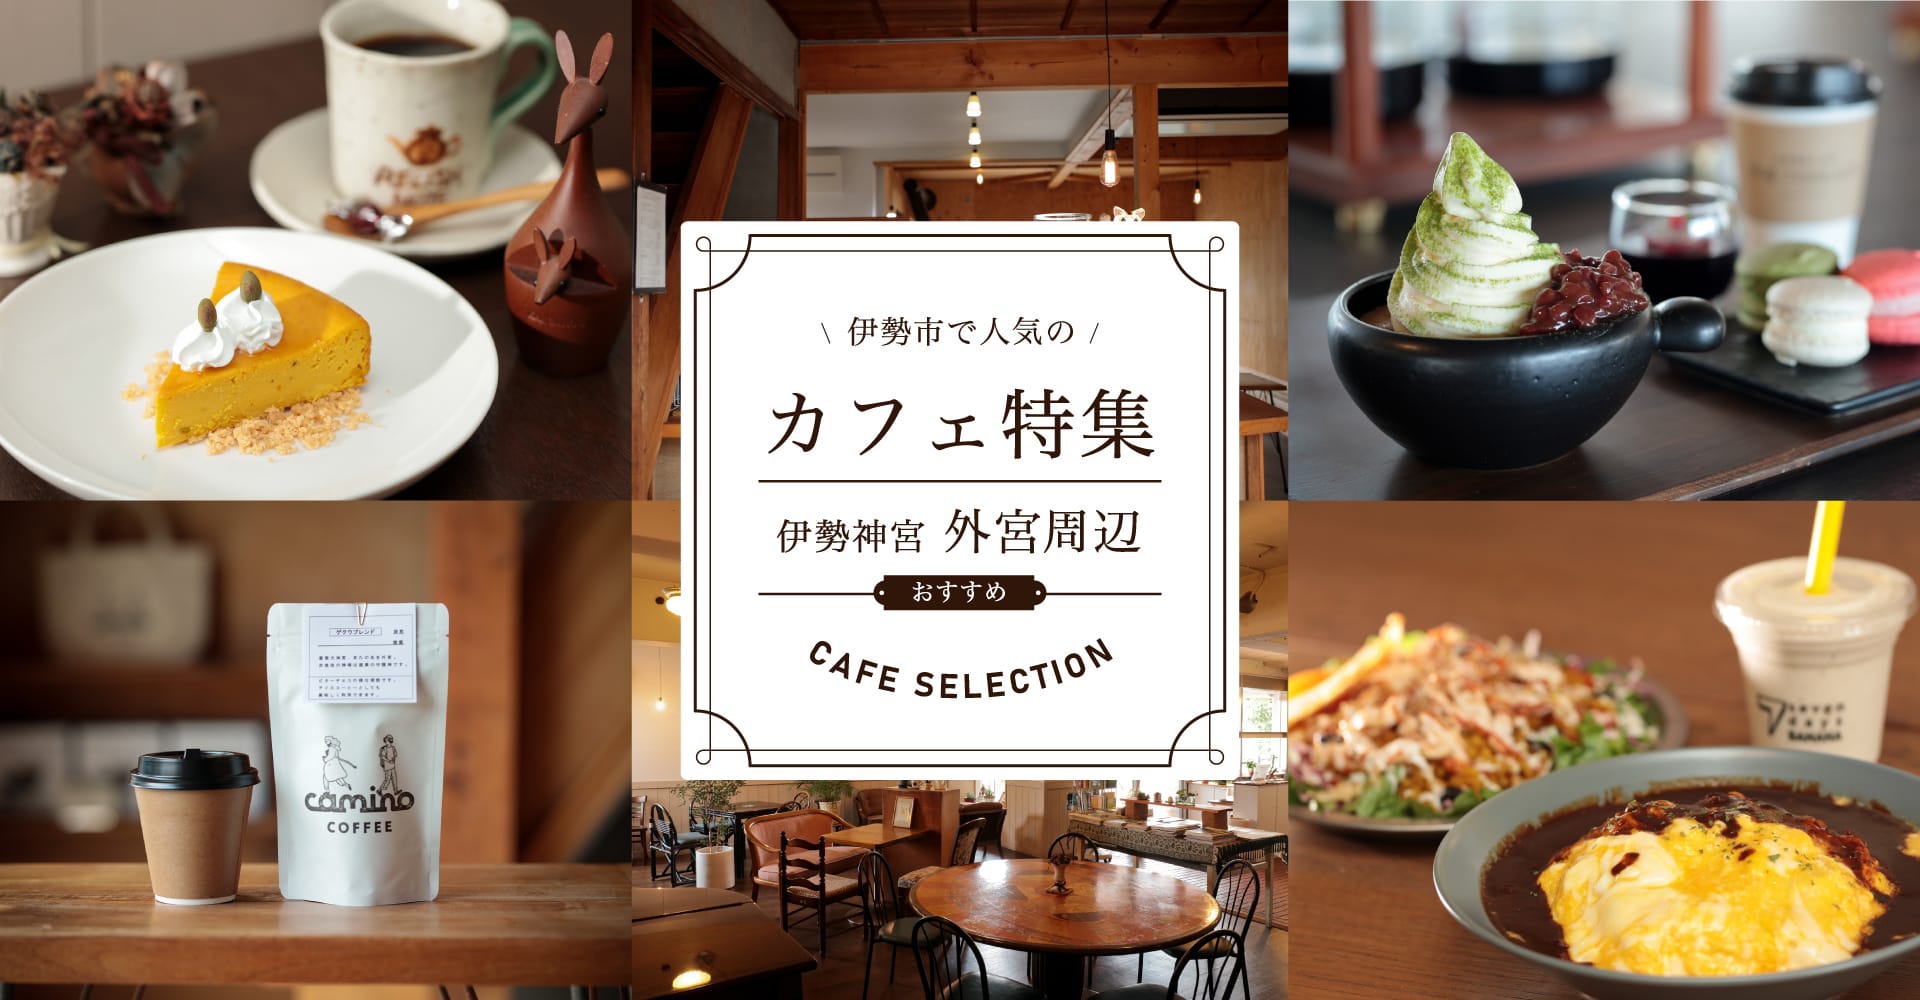 Special feature on popular cafes in Ise City Around Ise Jingu Geku